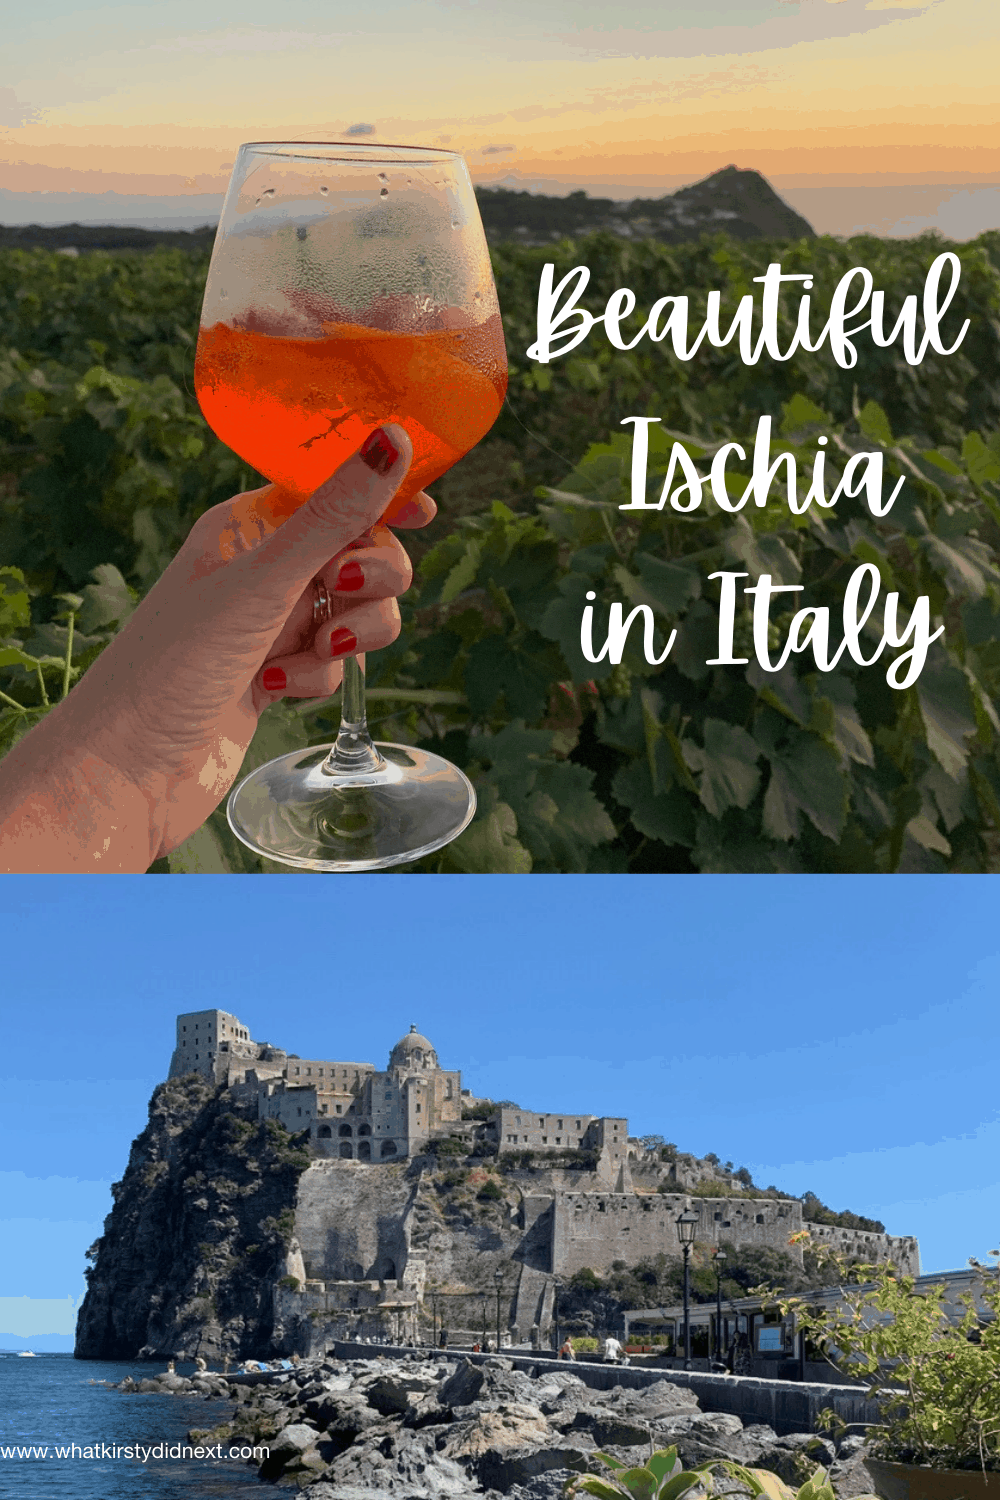 Ischia island in Italy